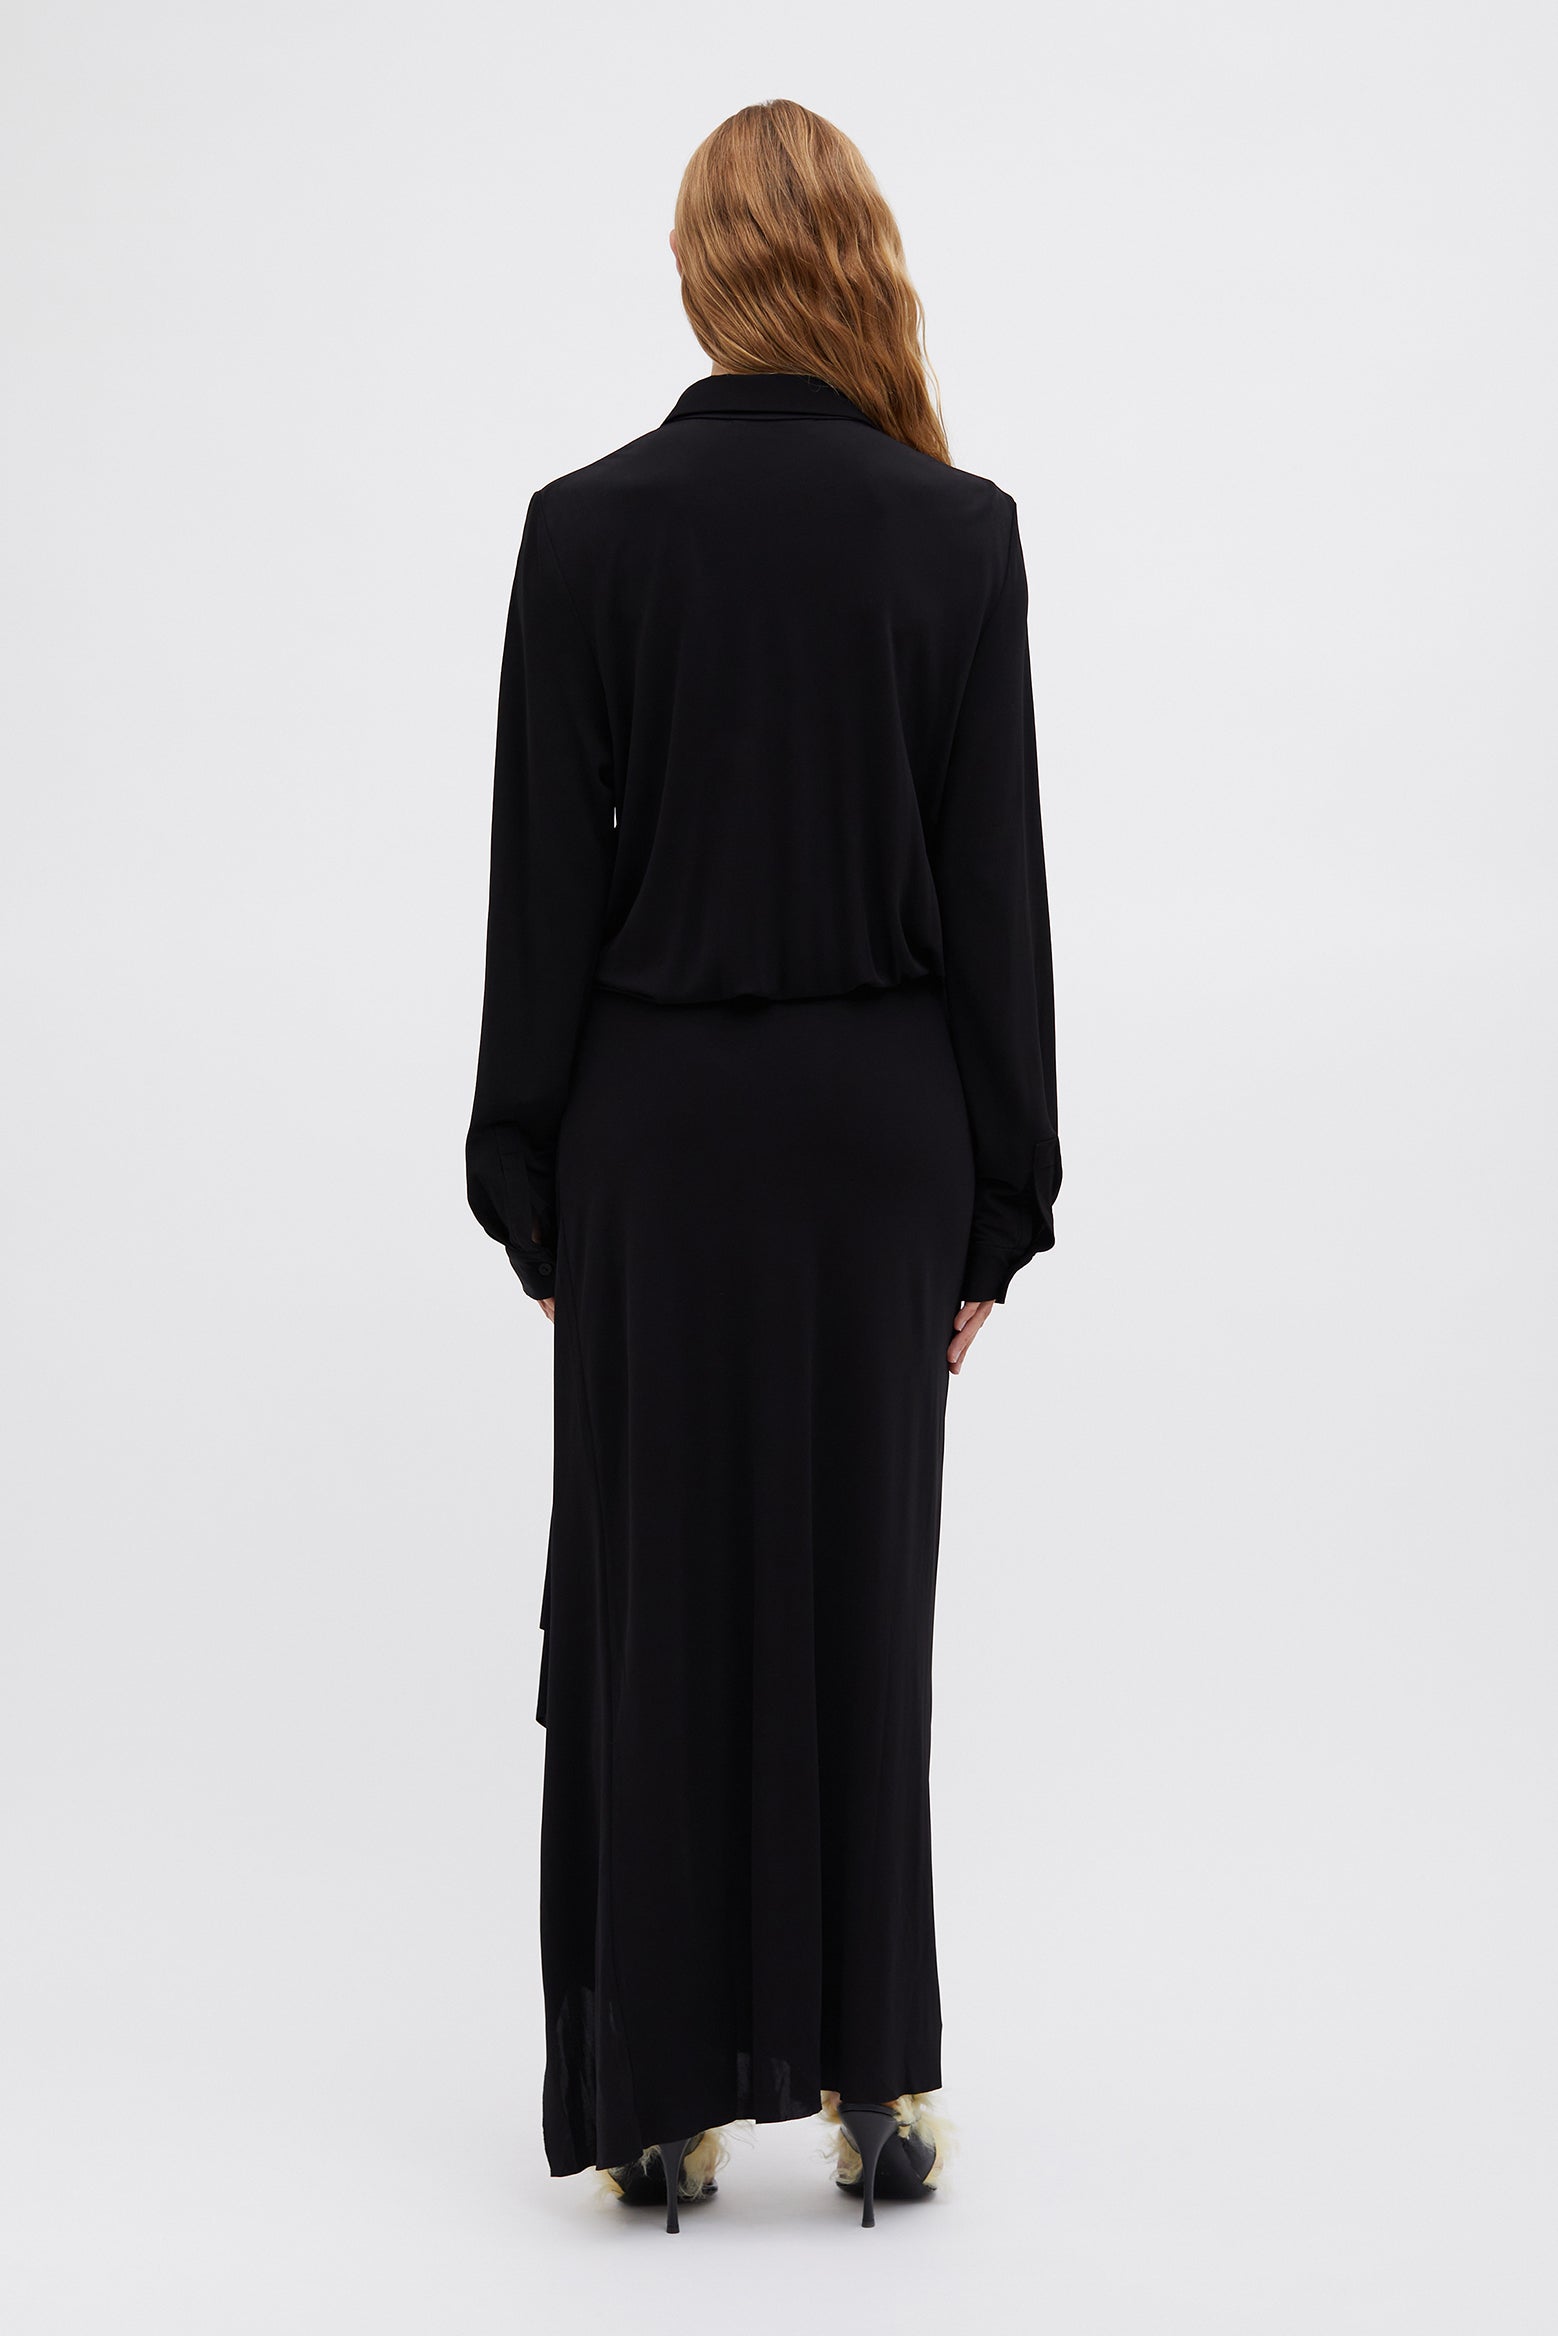 Christopher Esber Odessa Stone Shirt Dress in Black available at The New Trend Australia.